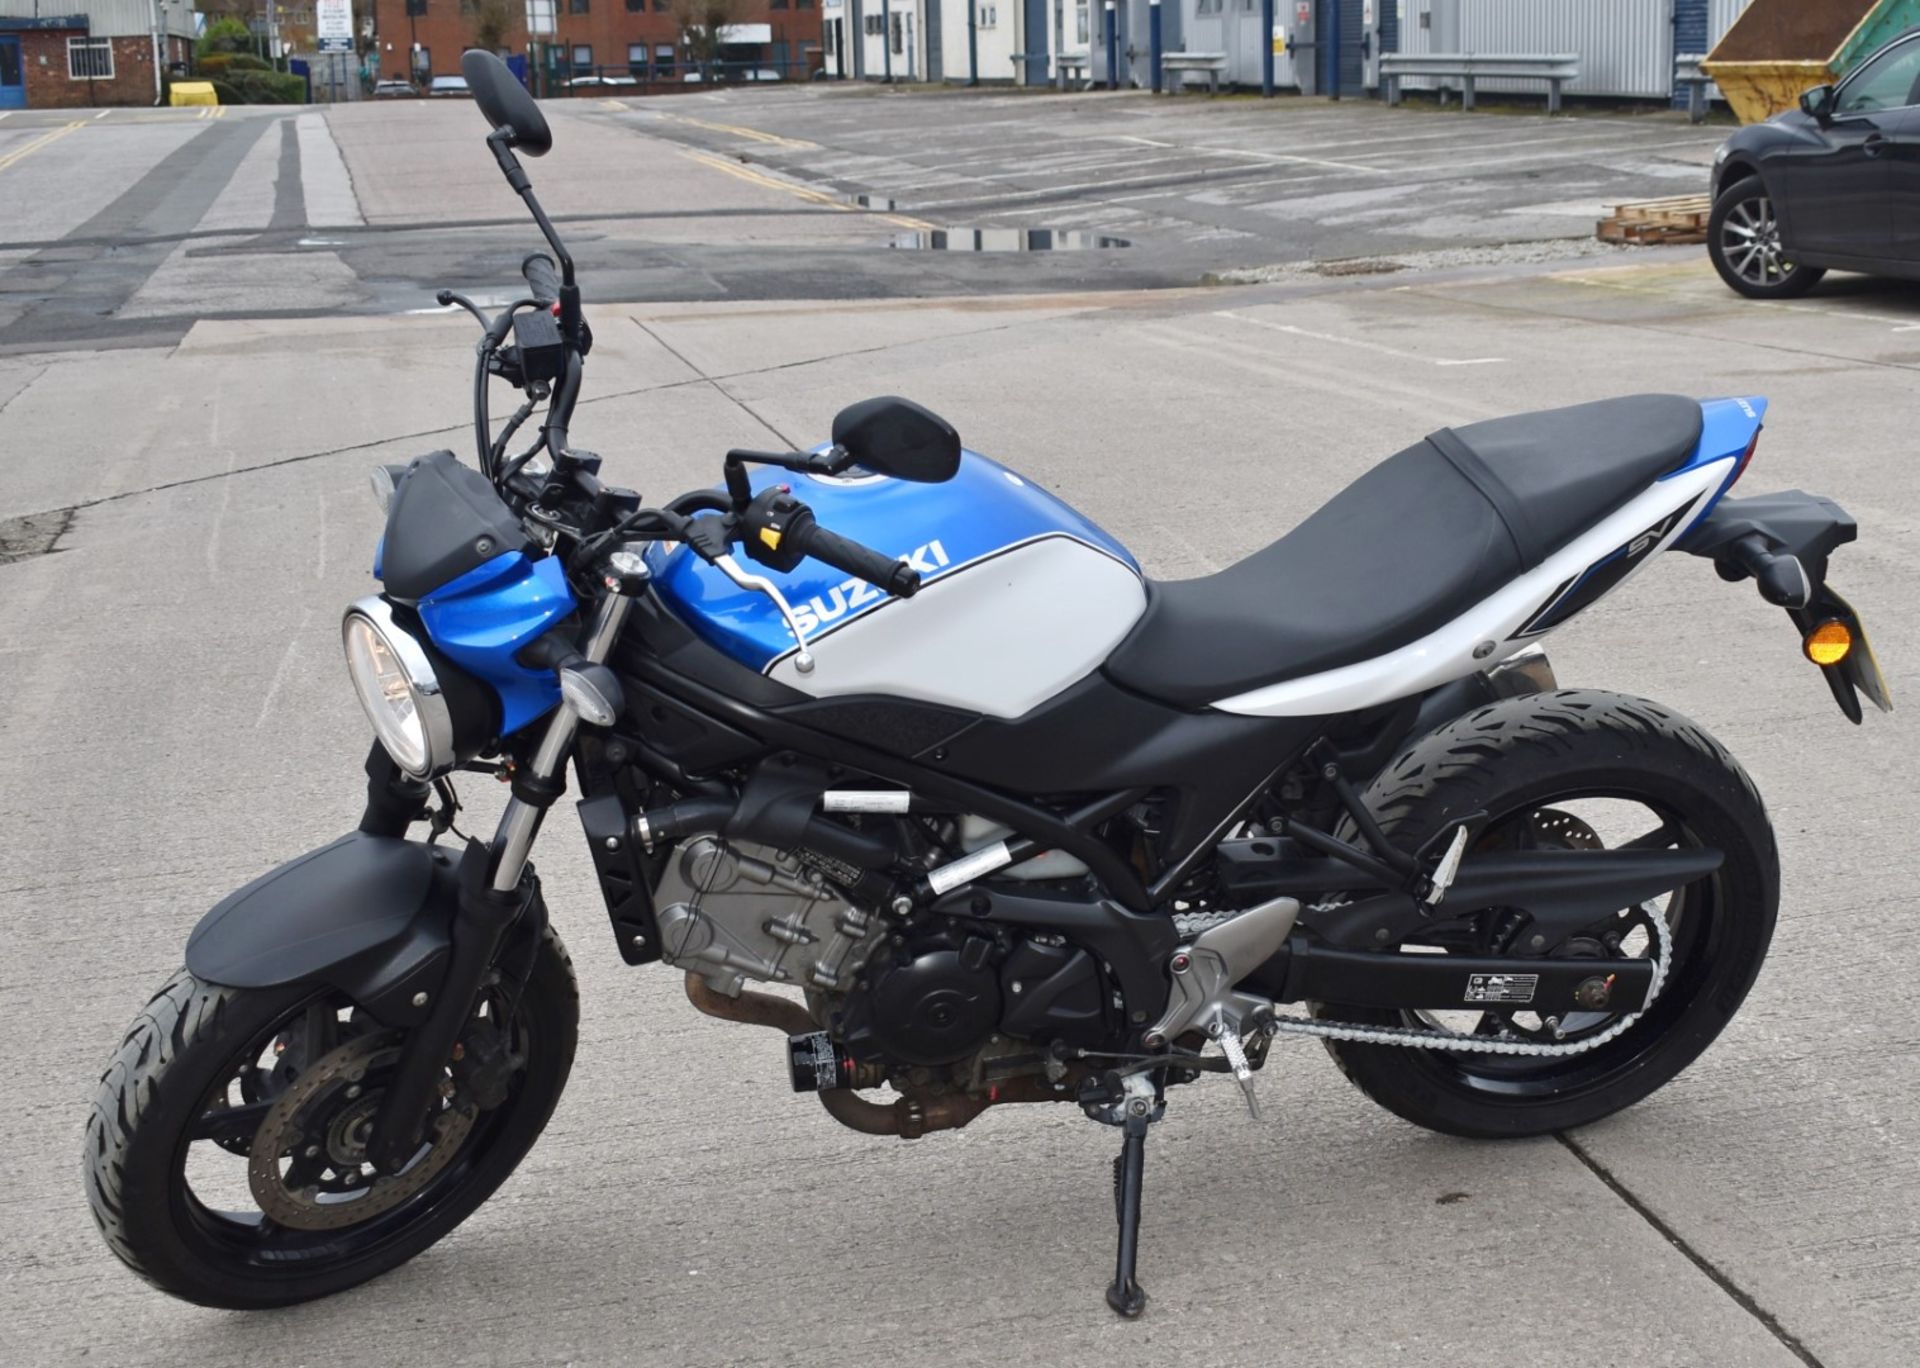 2018 Suzuki SV650 Motorcycle - BA18 UFV - Mileage: 18,188 - Image 19 of 25